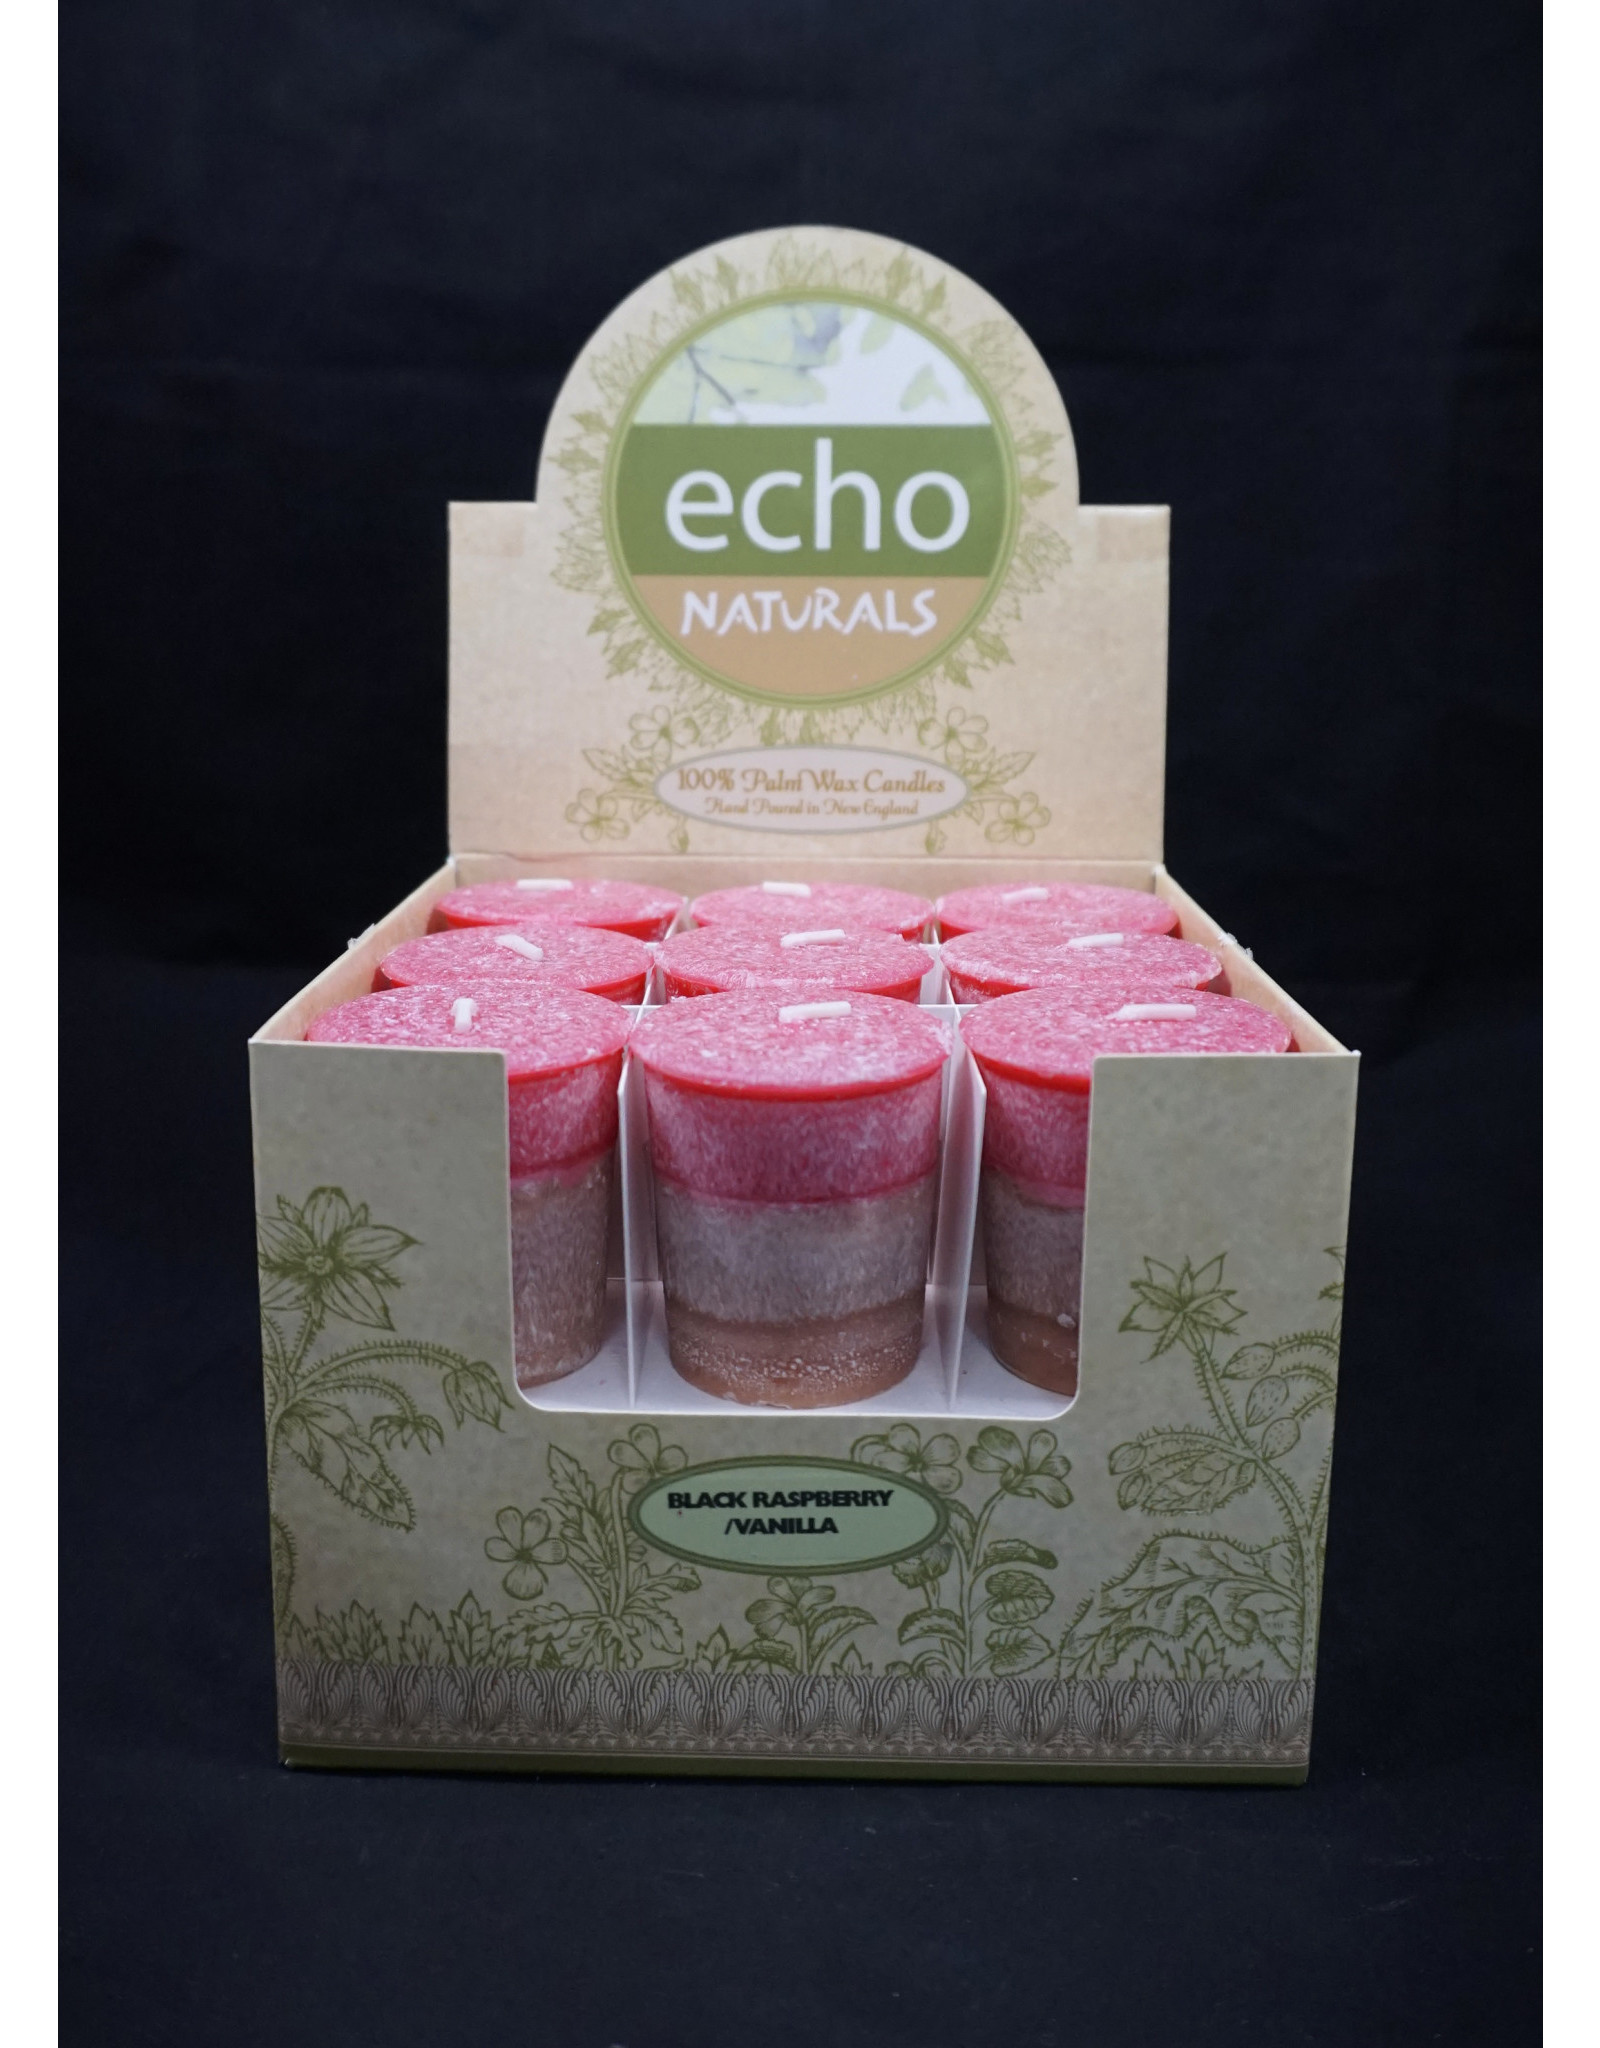 Echo Naturals Votive Candle - Black Raspberry Vanilla